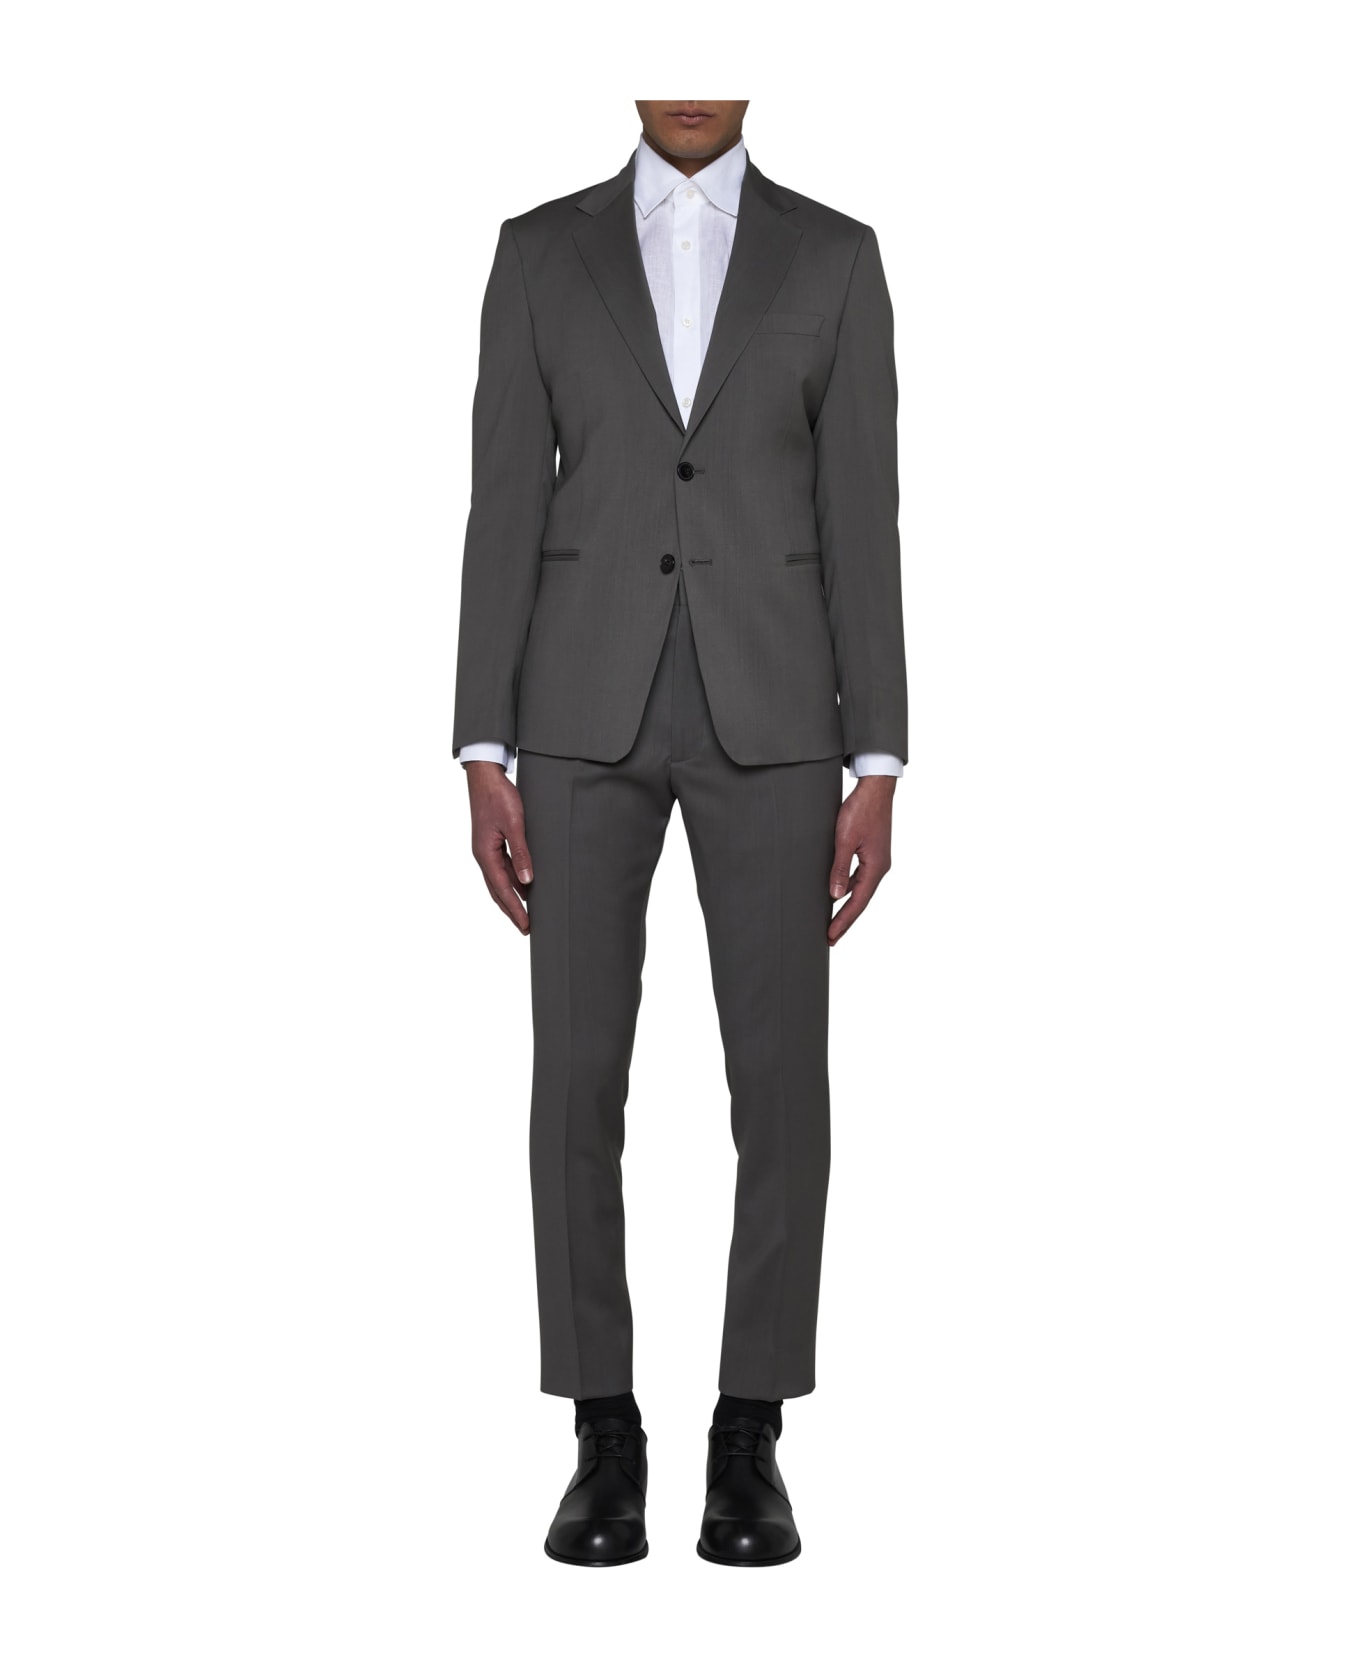 Low Brand Suit - Bracco